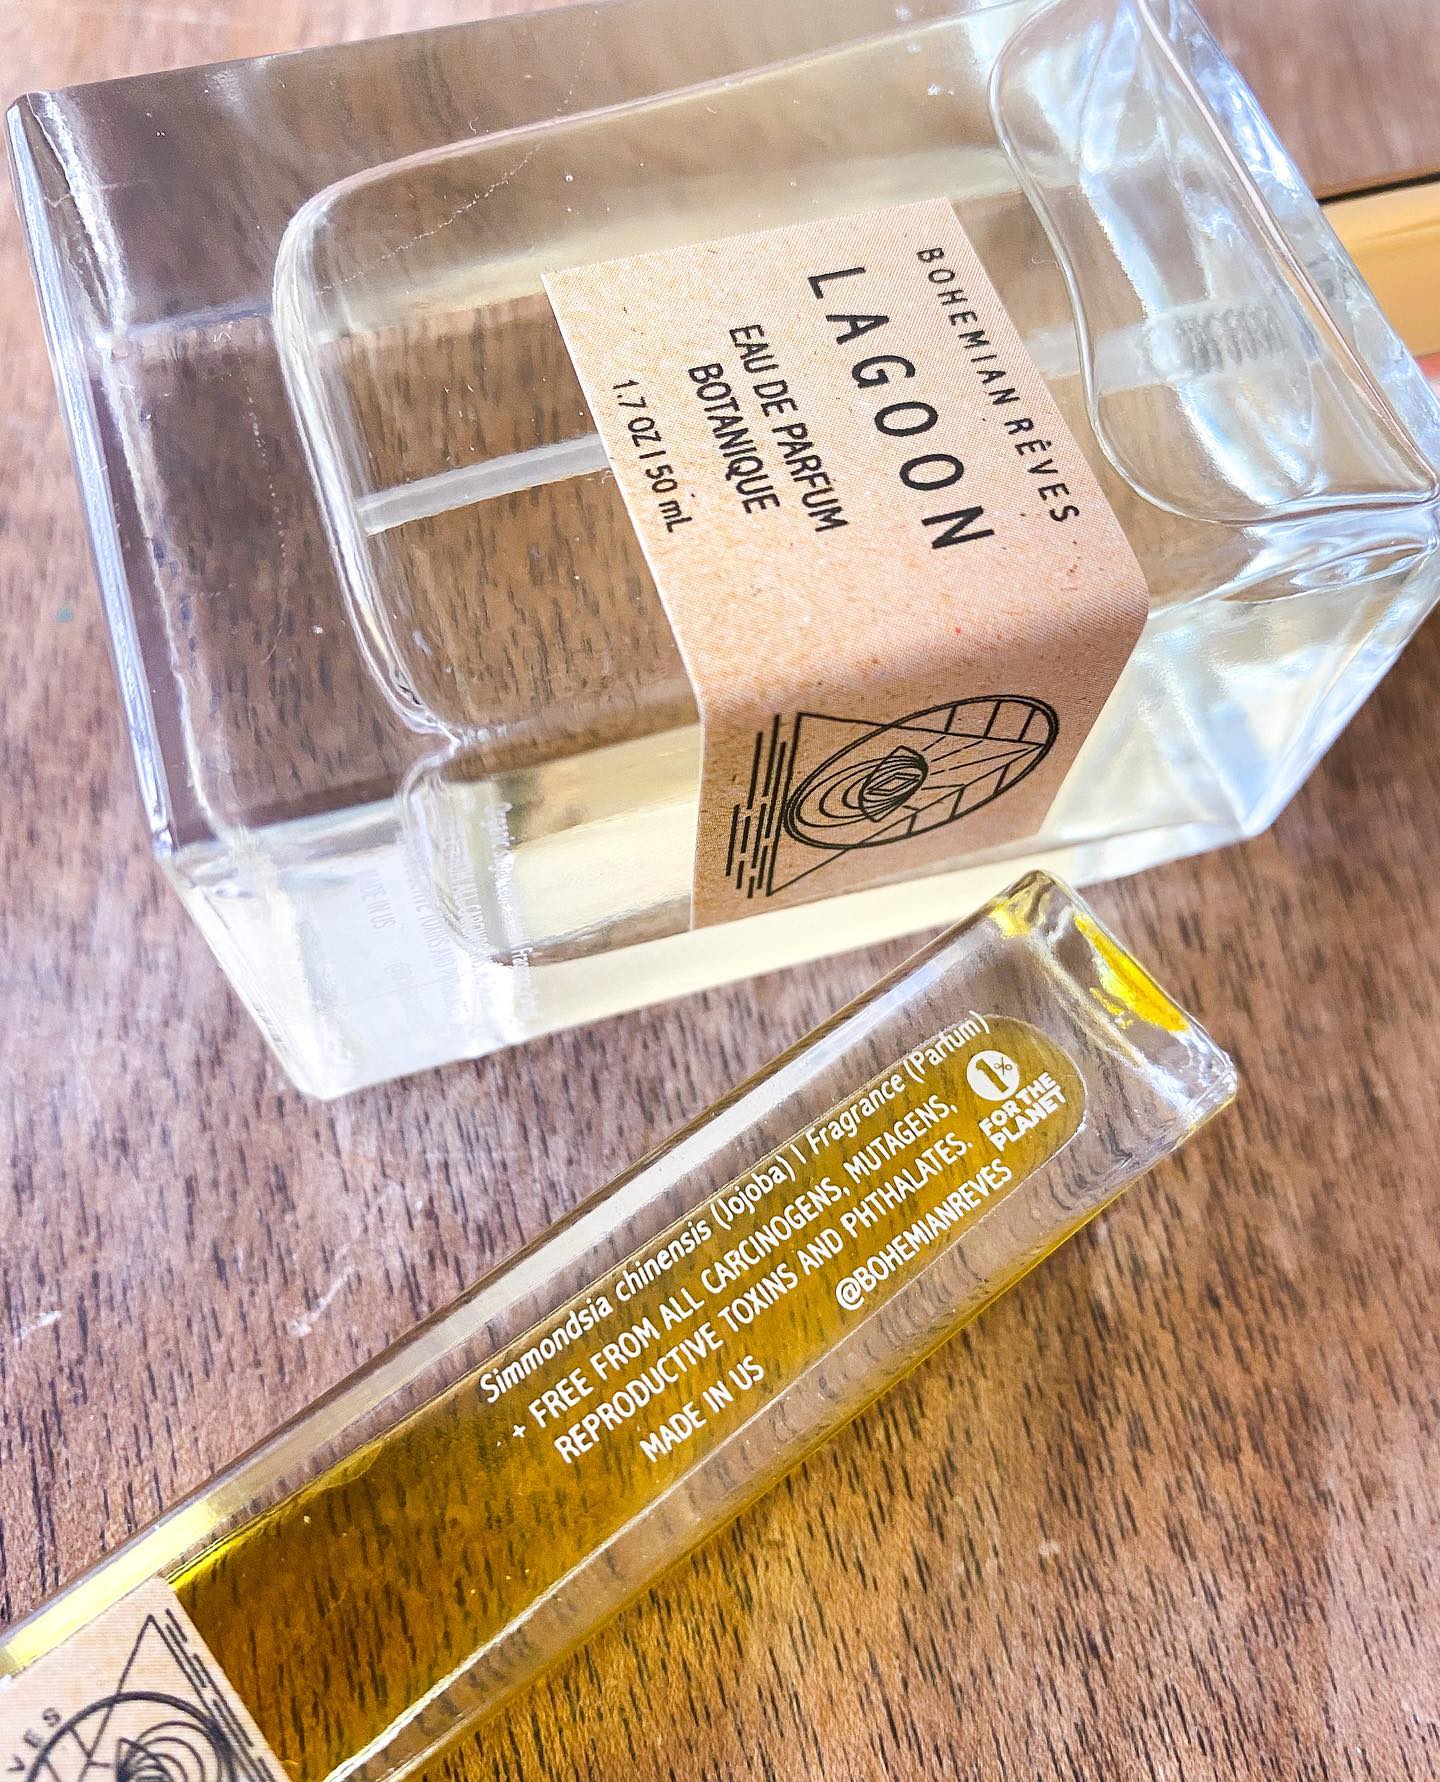 Lagoon Botanical Perfume Bottle